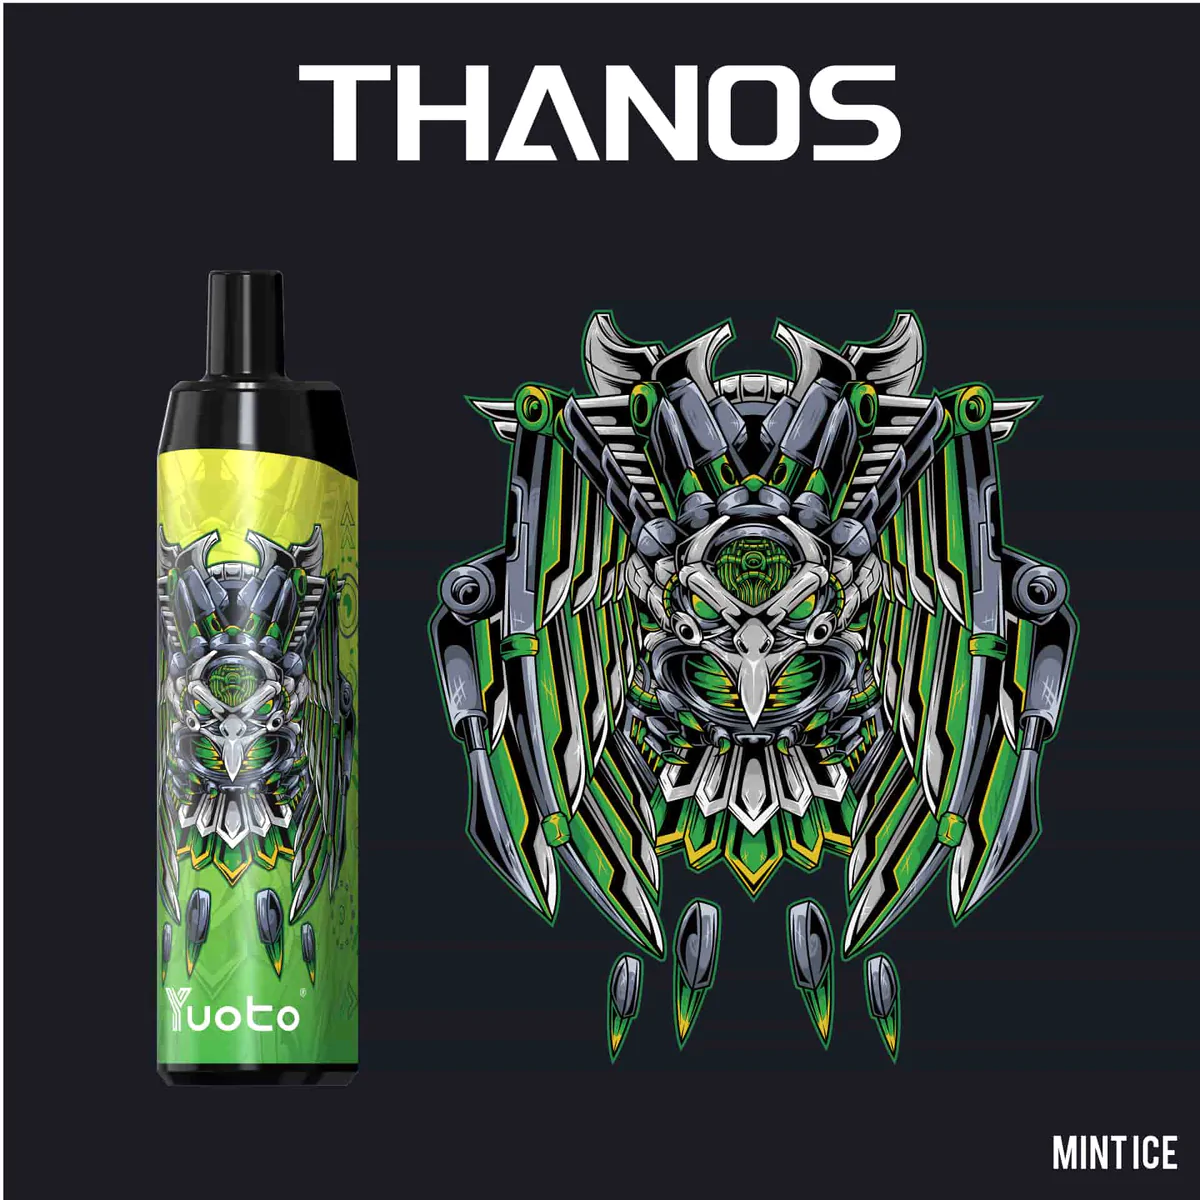 Yuoto Thanos Mint ice